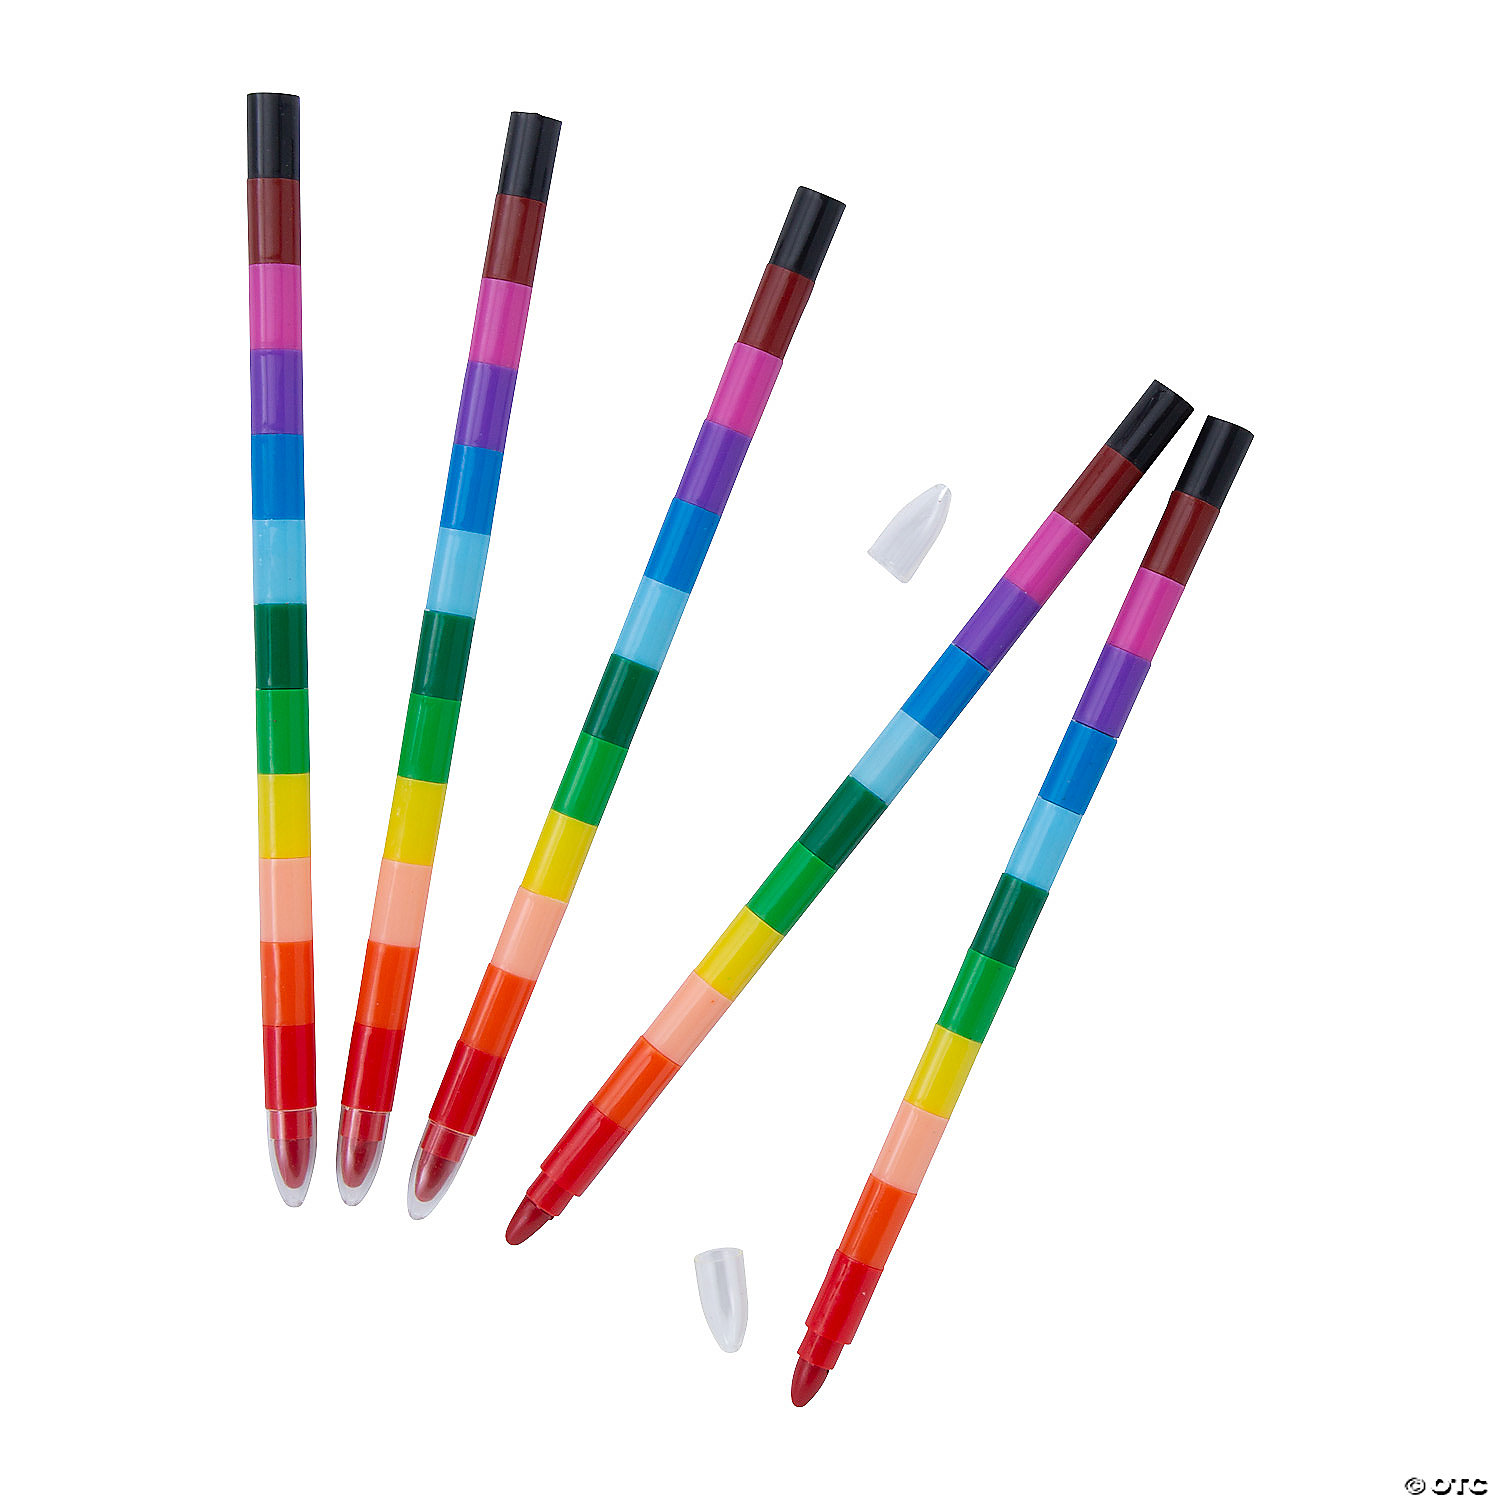 BAZIC Washable Jumbo Silky Gel Crayons, 12 Per Pack, 3 Packs